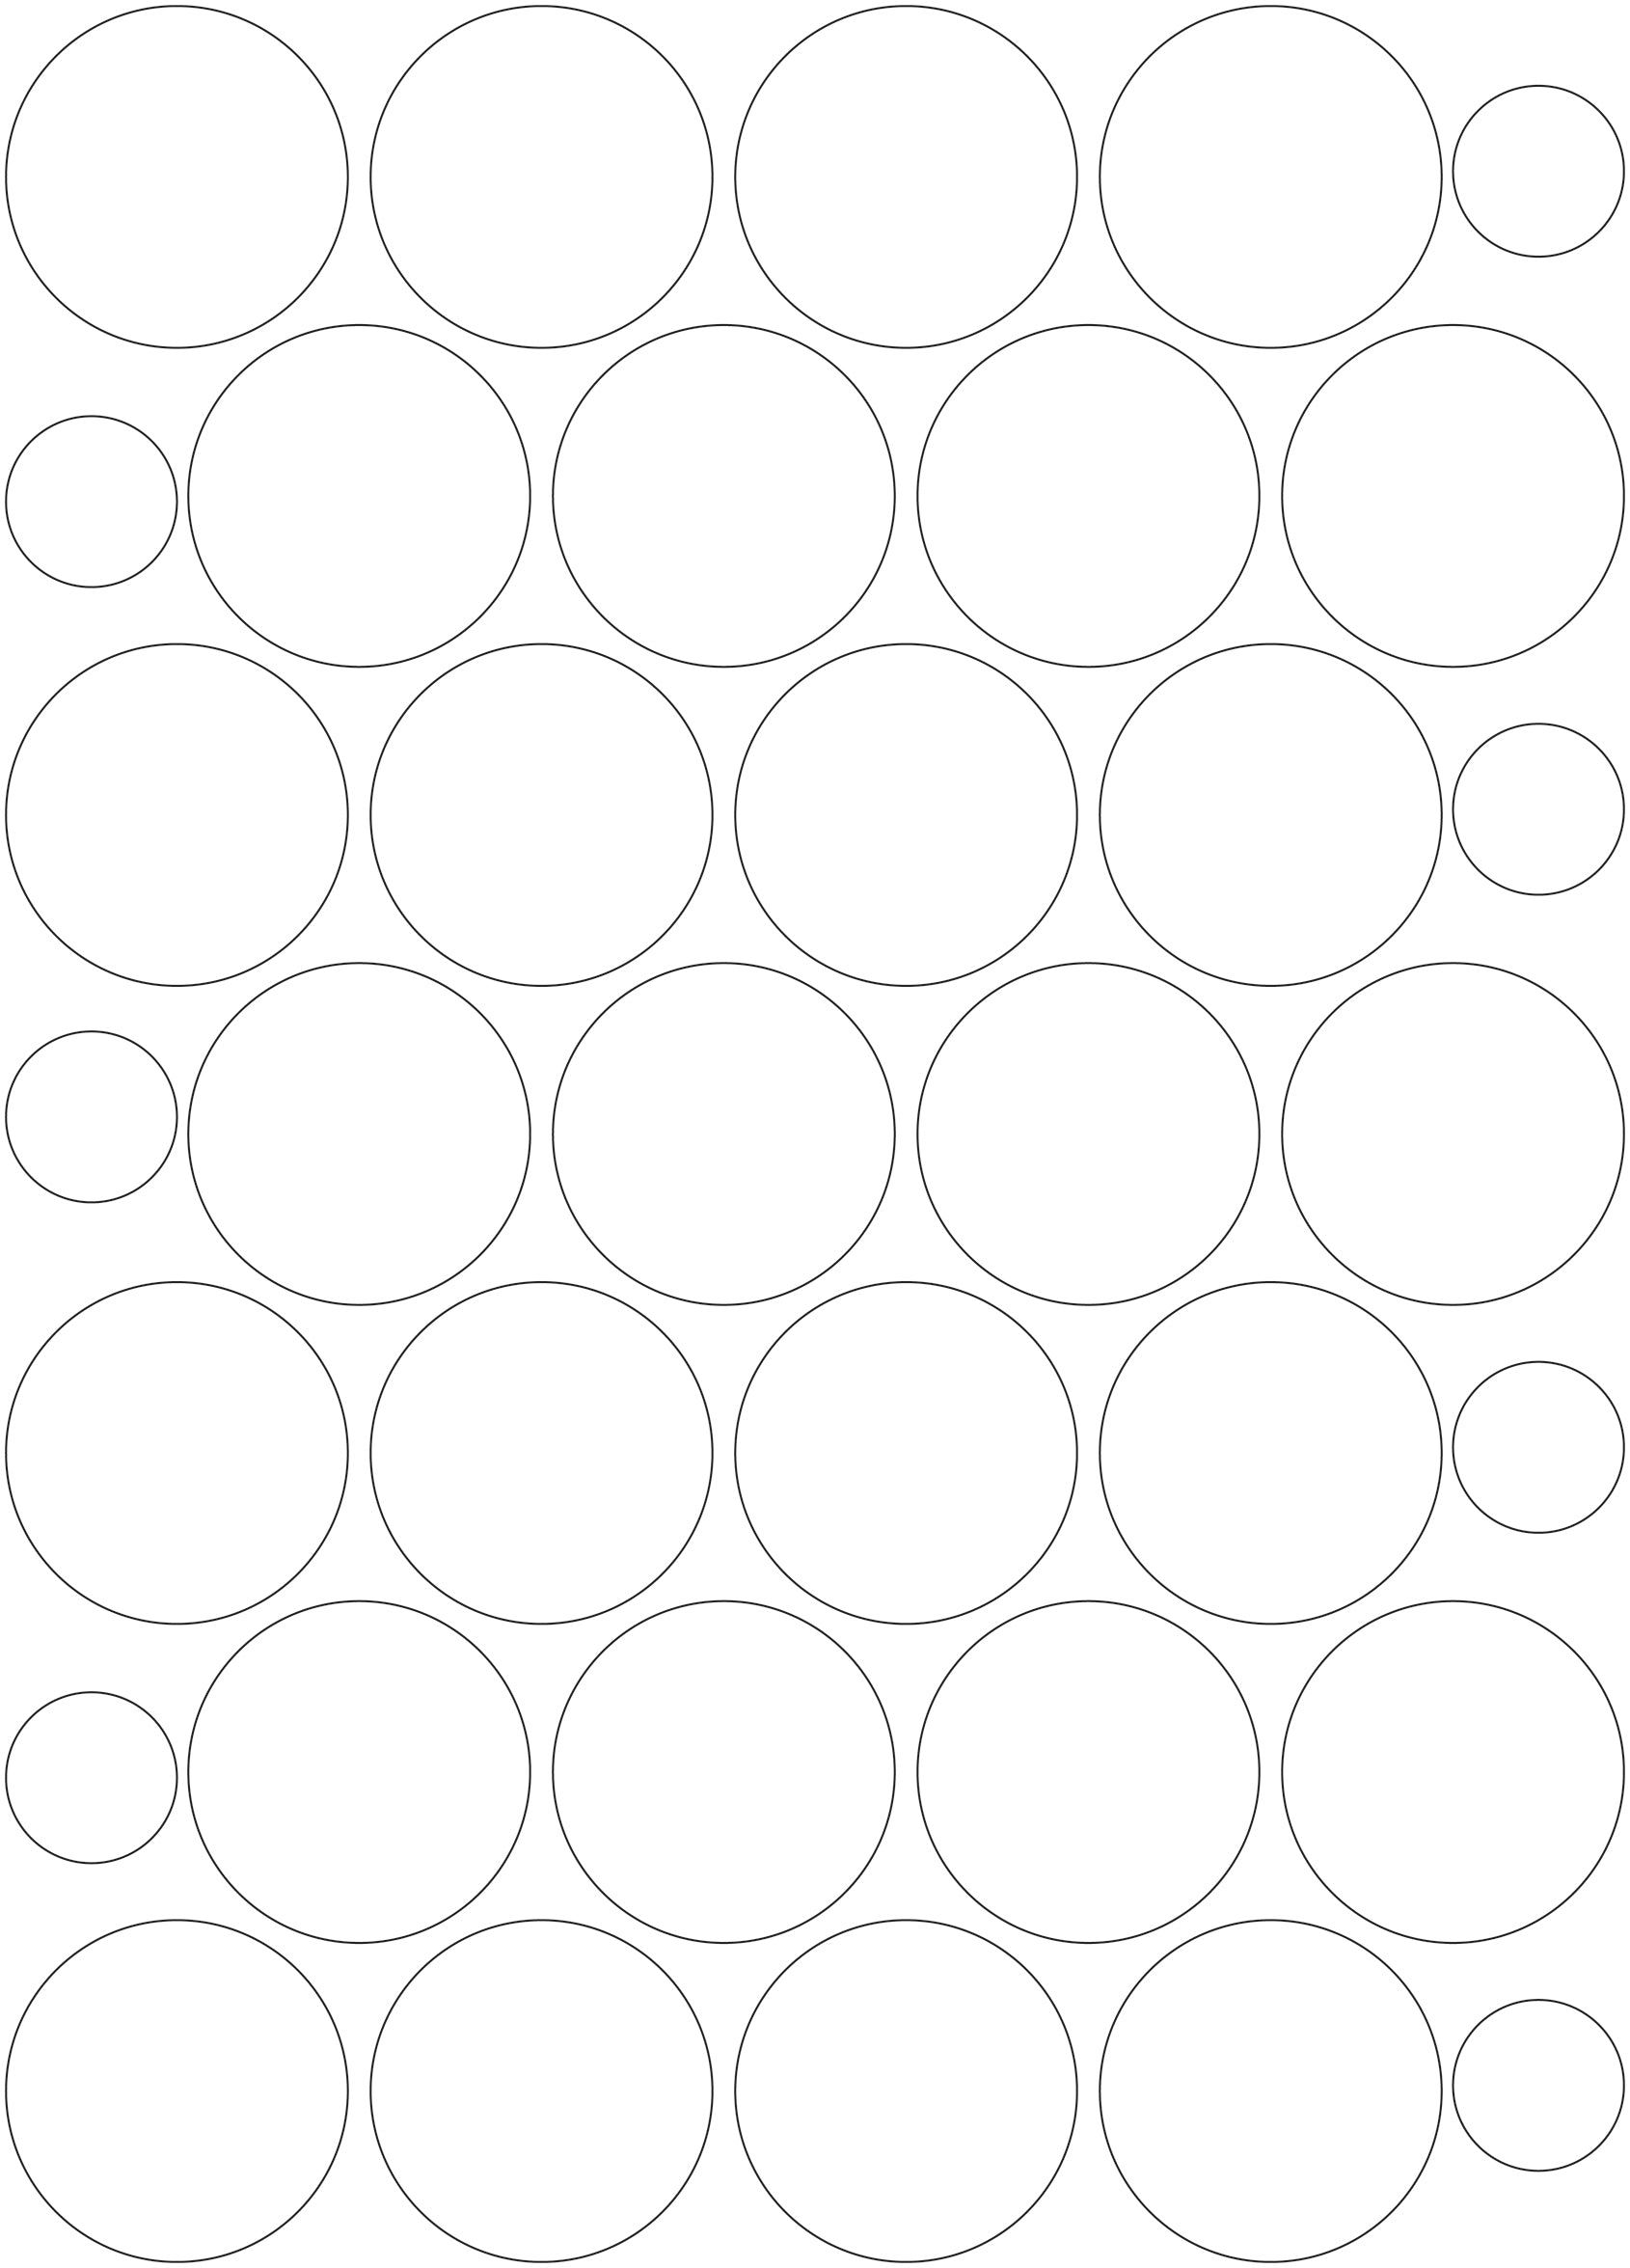 3M White/Silver Reflective Circles - A3 Sheet 60mm Circles